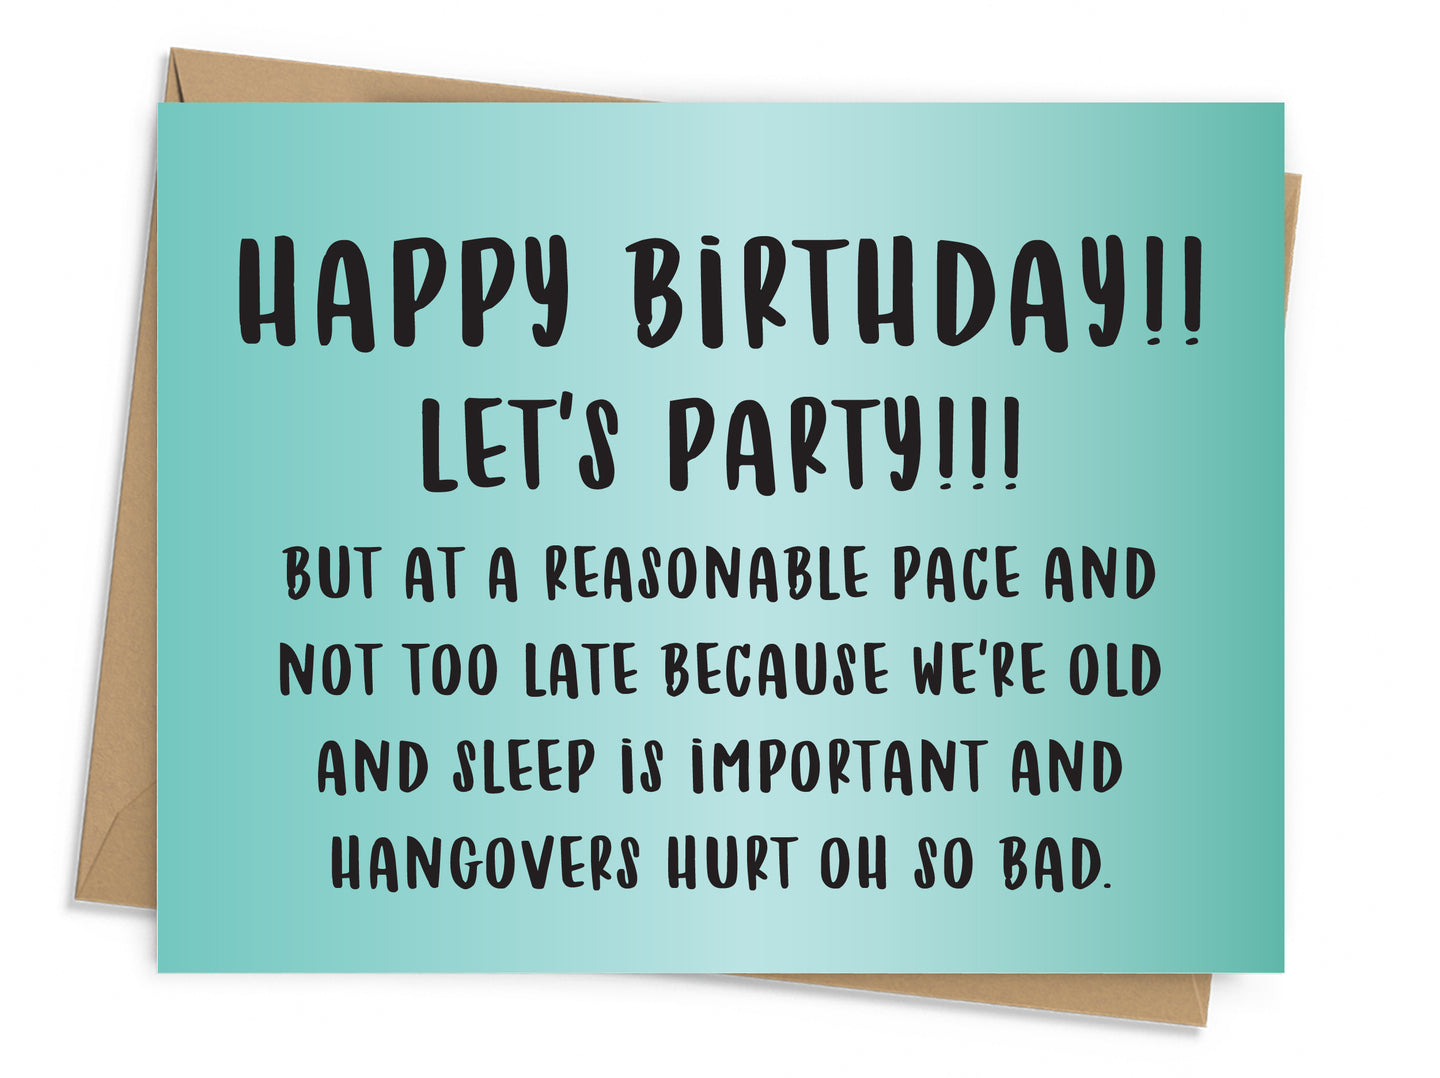 Let's Party Reasonably Birthday Card